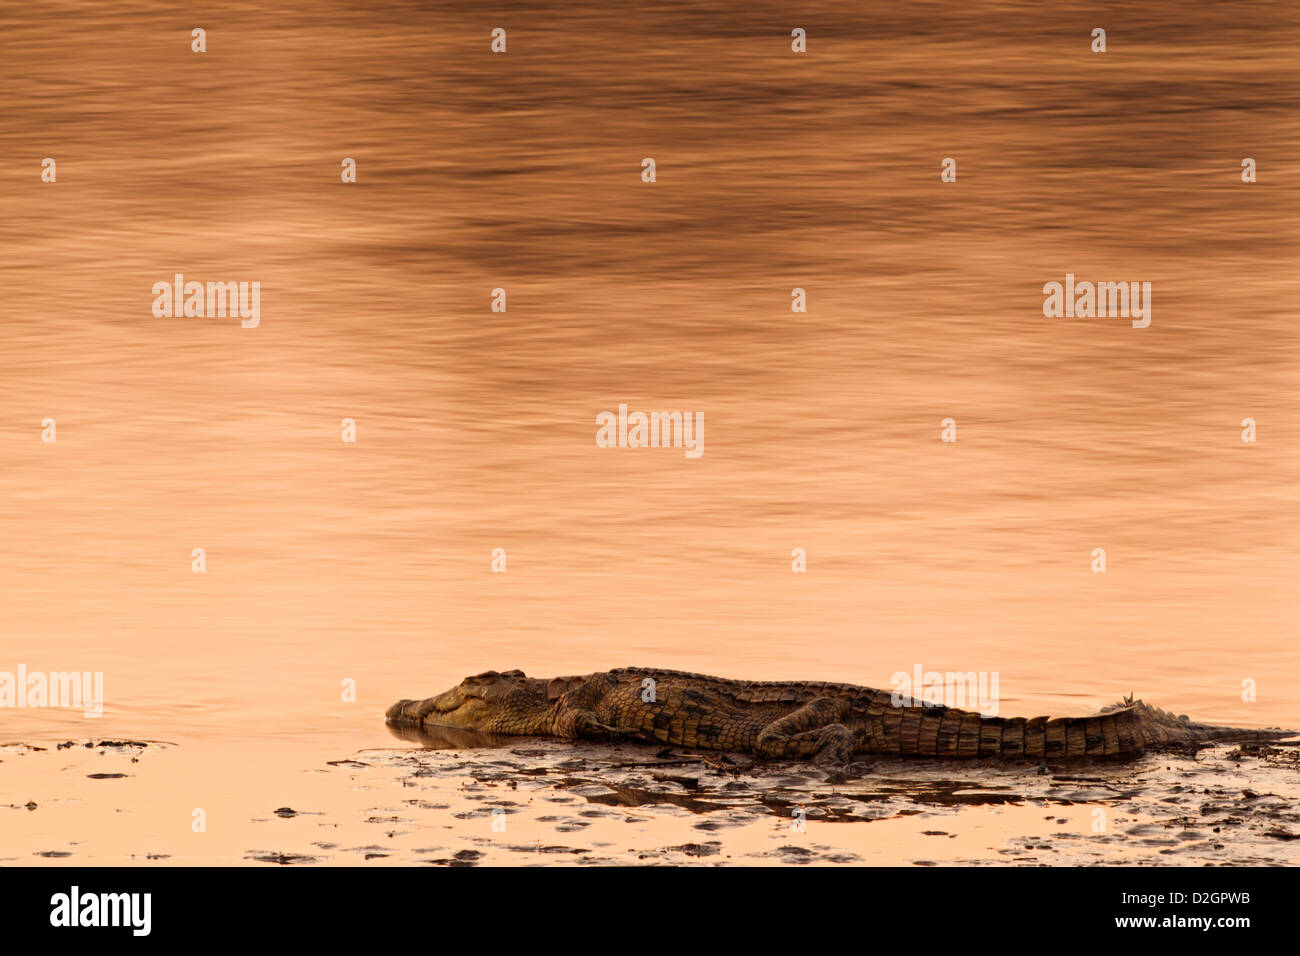 Nil-Krokodil ruht auf der Sandbank des Luangwa River, South Luangwa Nationalpark Sambia. Stockfoto